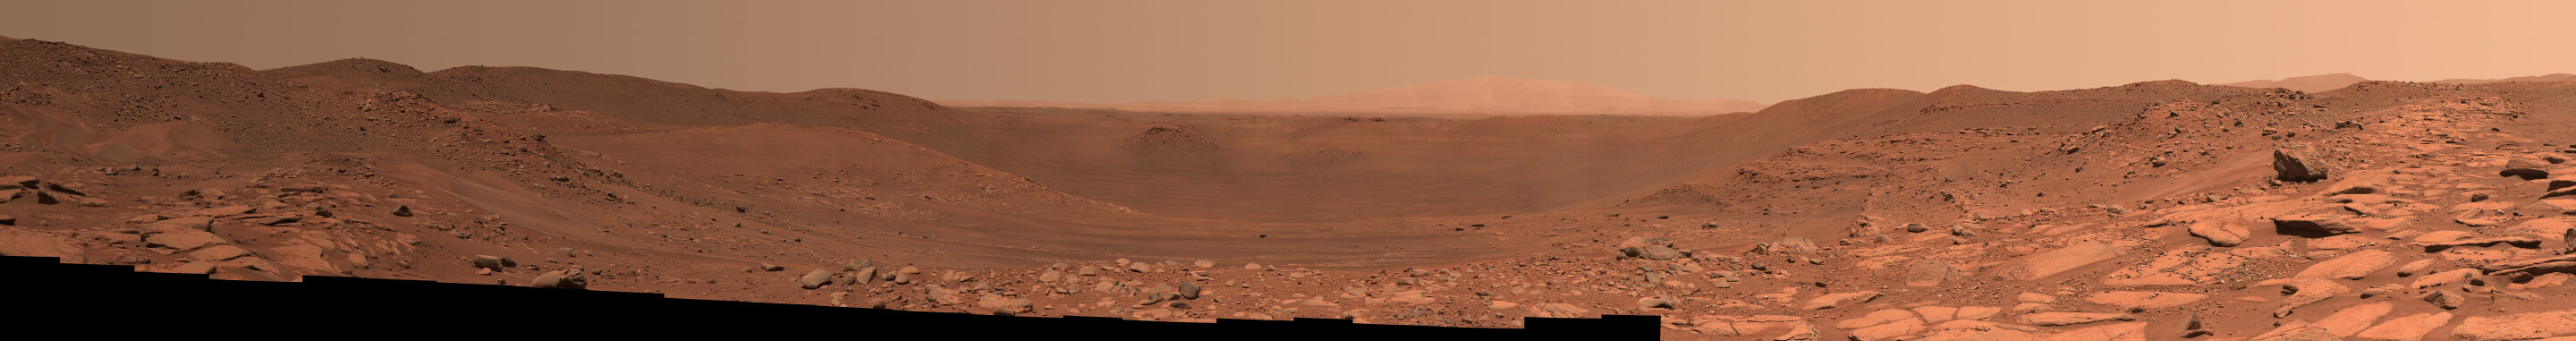 El rover Perseverance captura la vista del cráter Belva de Marte